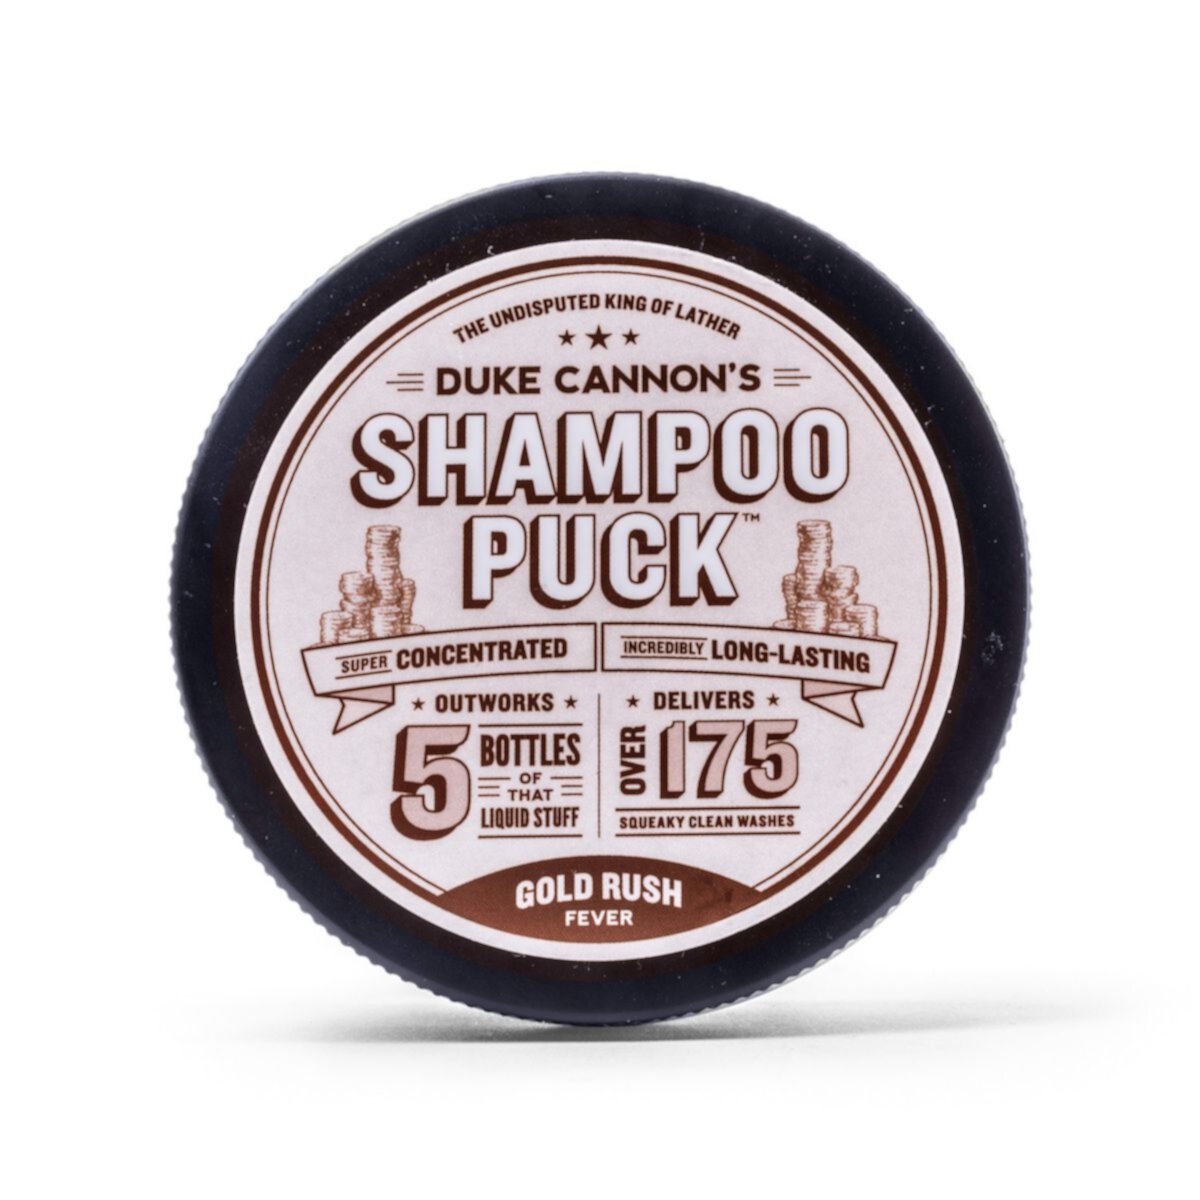 Duke Cannon Supply Co. Shampoo Puck - Gold Rush Fever DUKE CANNON